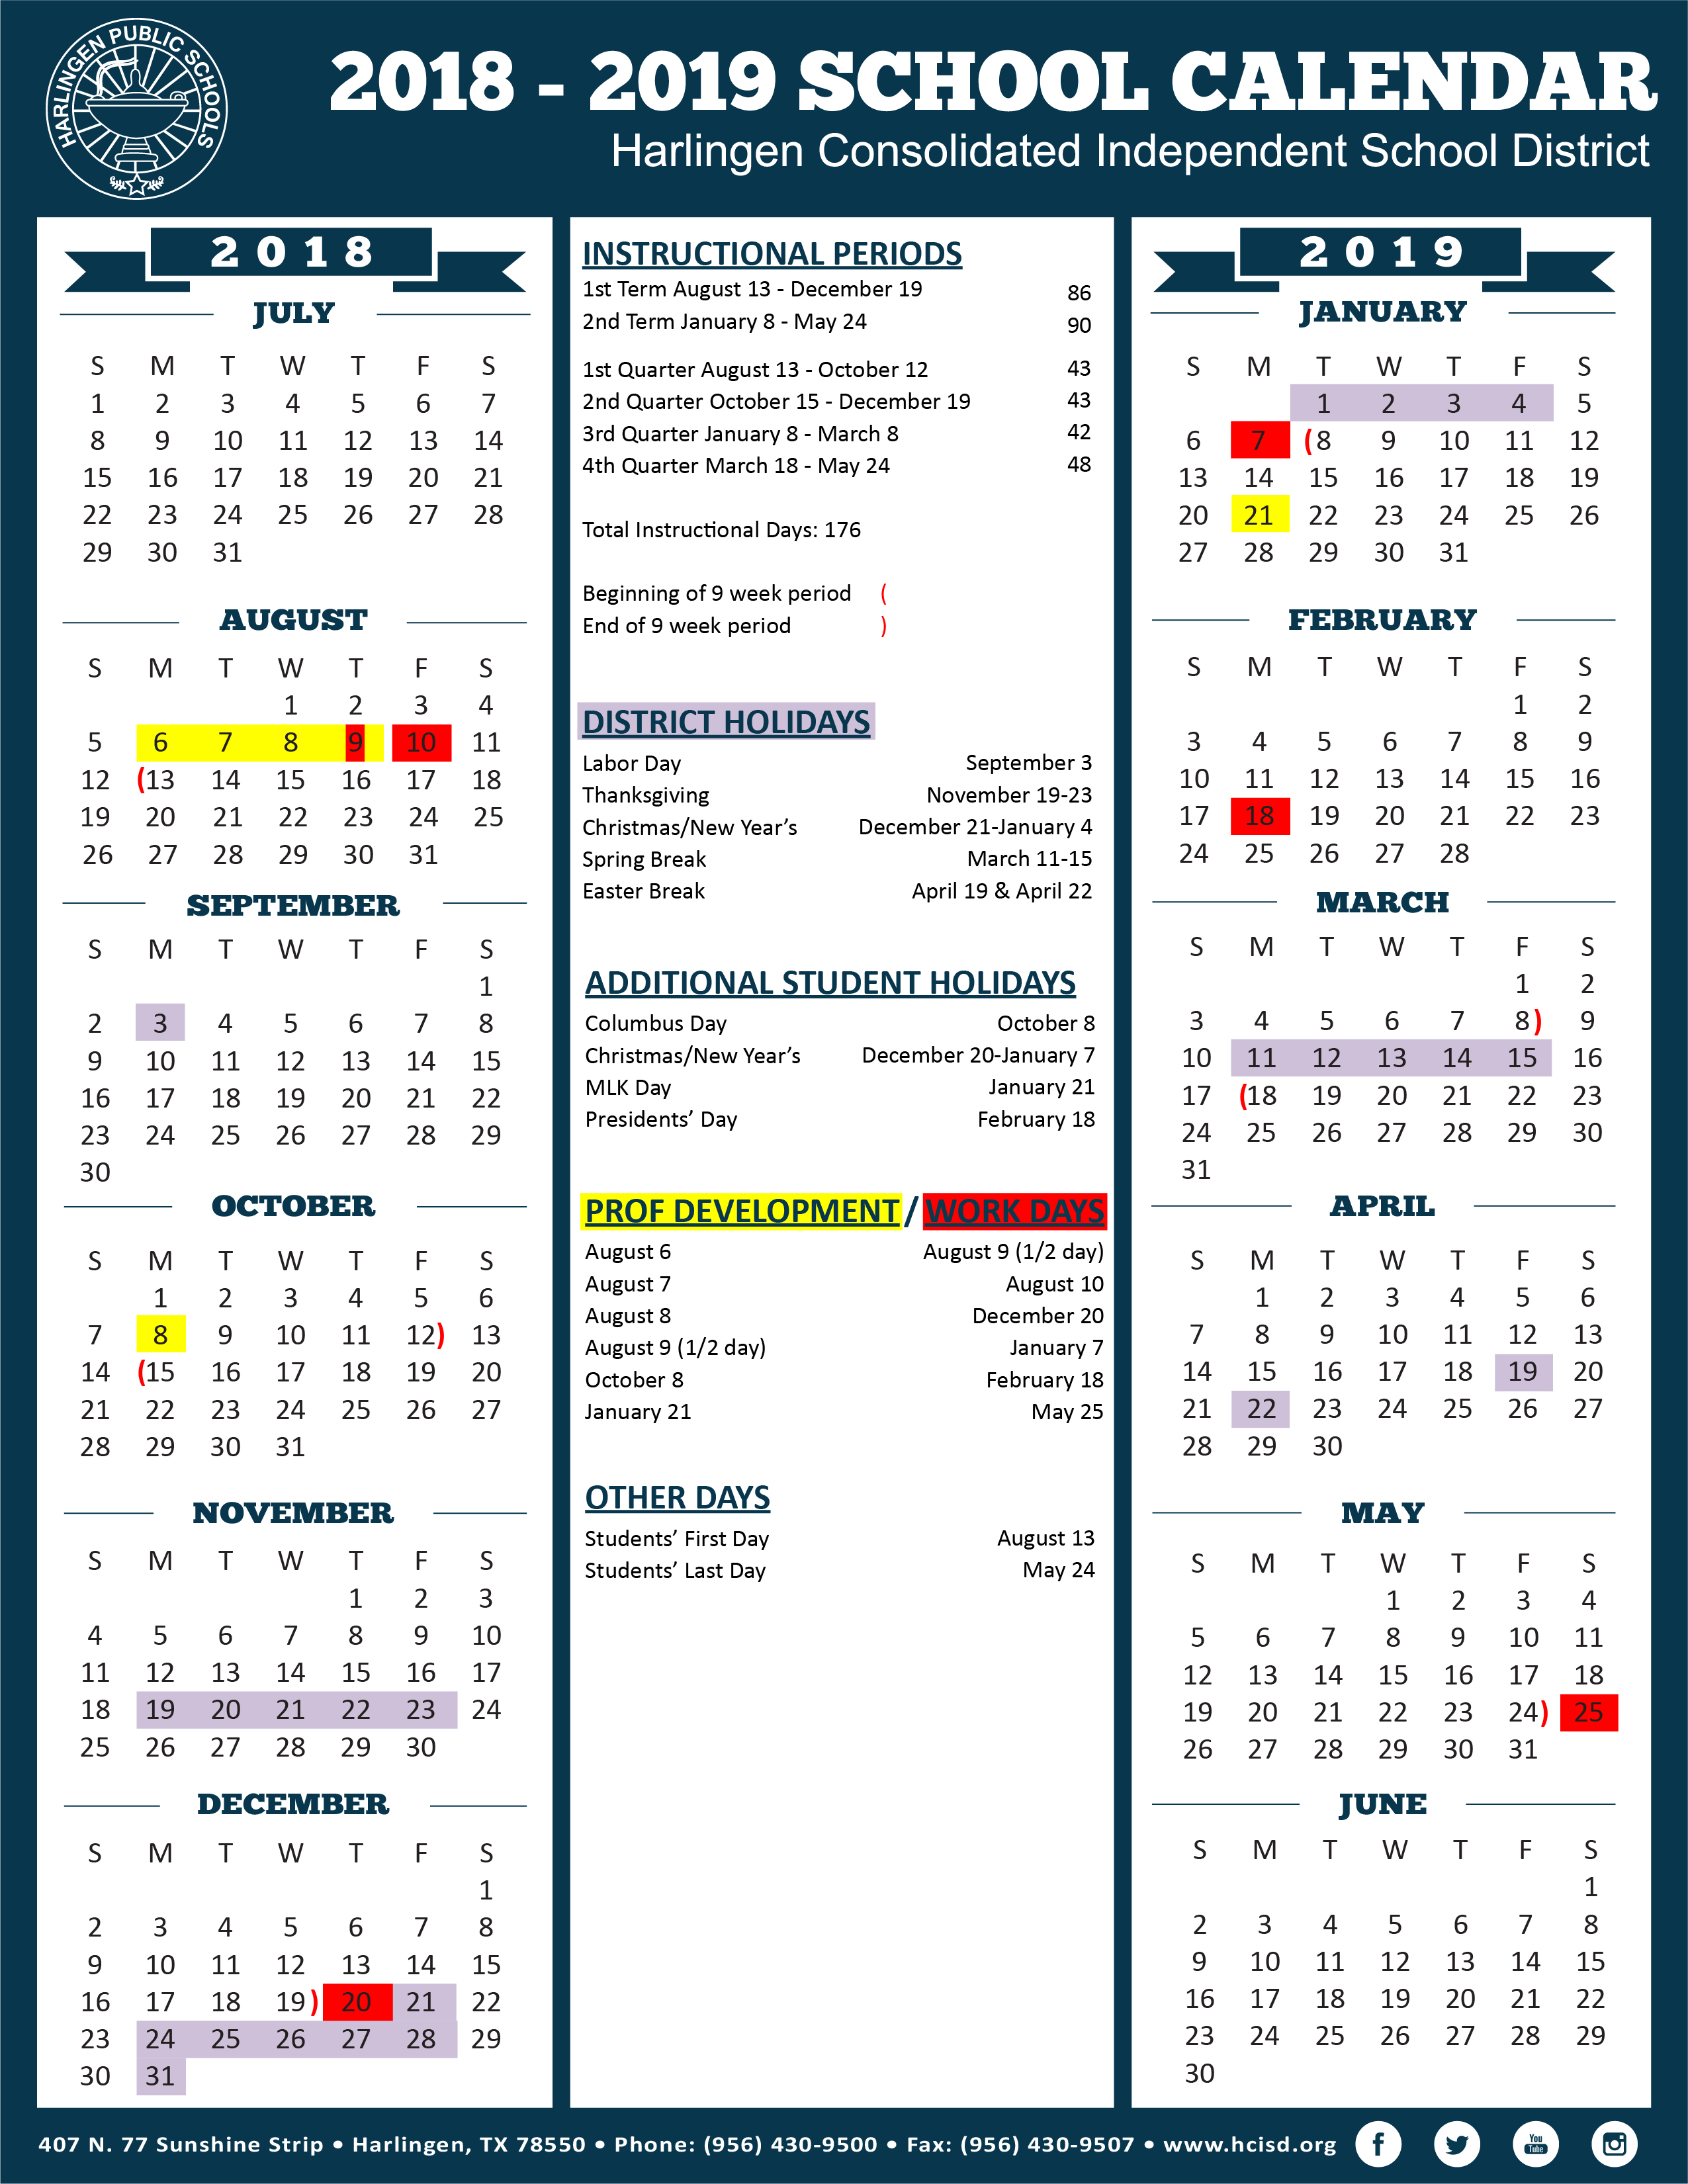 HCISD adopts calendar for 2018-2019 school year